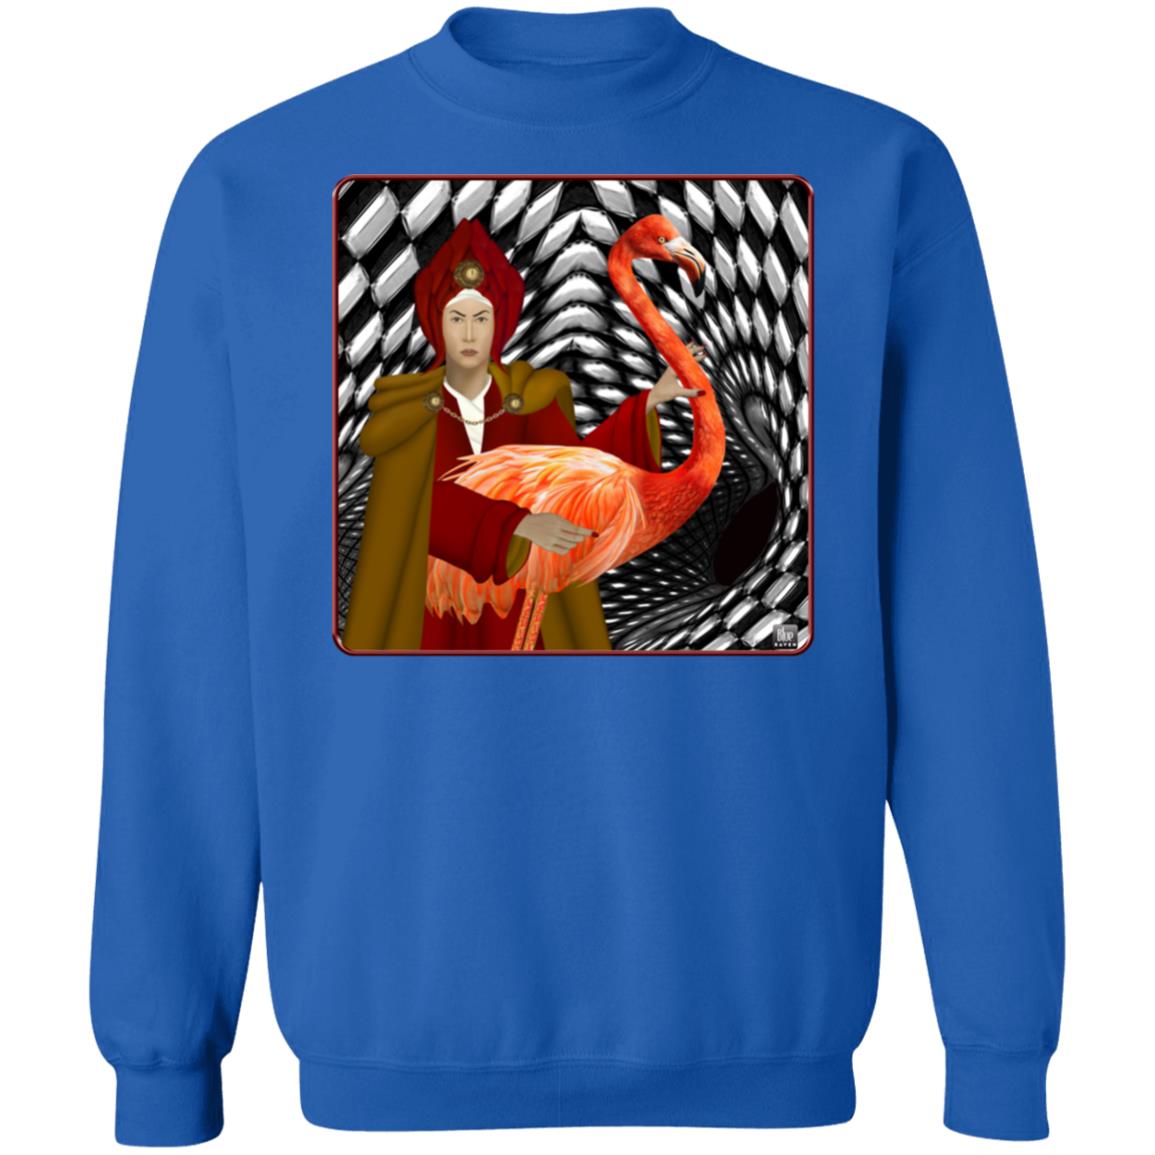 The Red Queen With The Flamingo - Unisex Crew Neck Sweatshirt